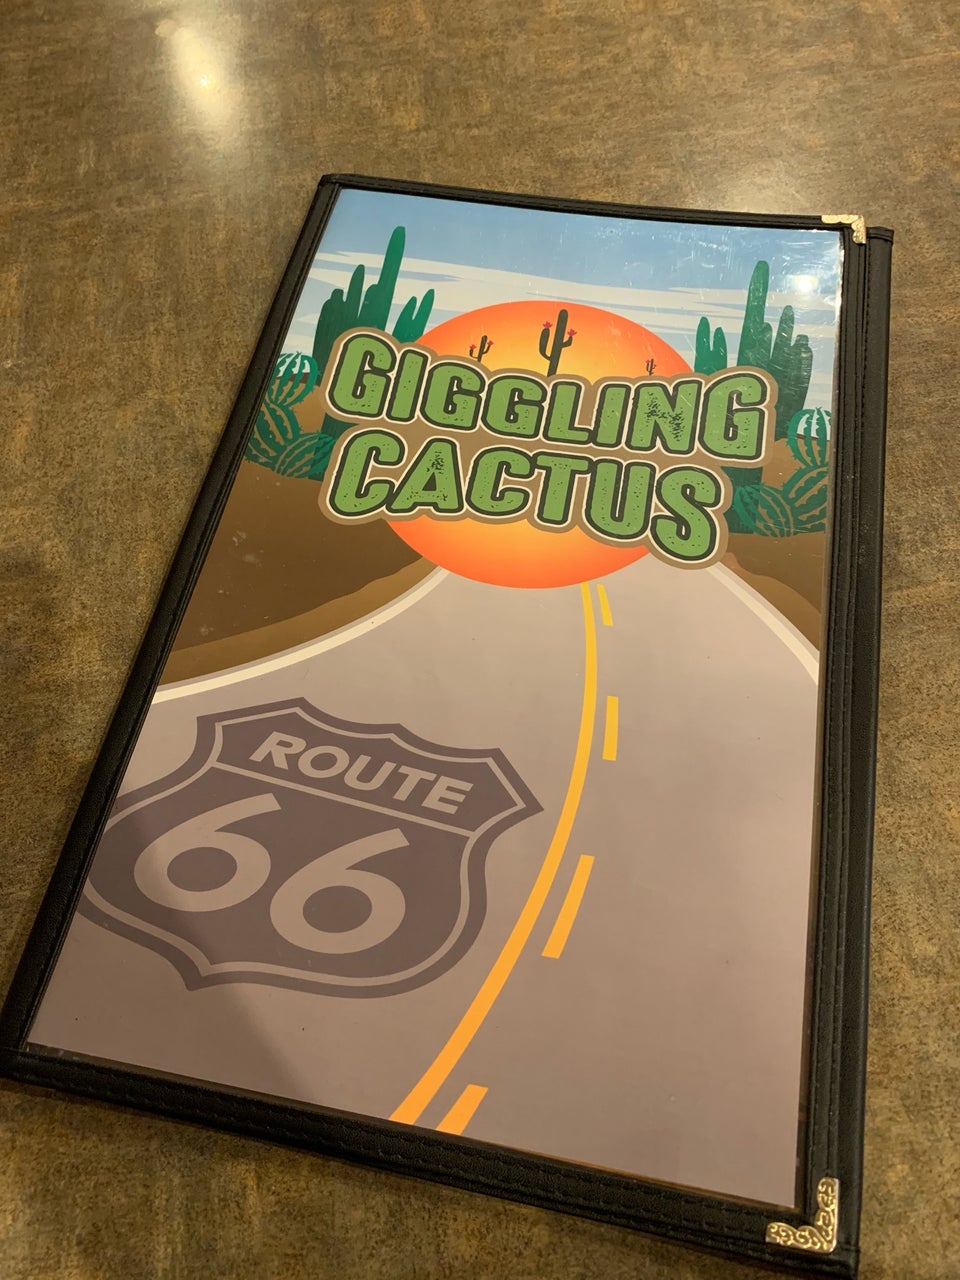 Giggling Cactus